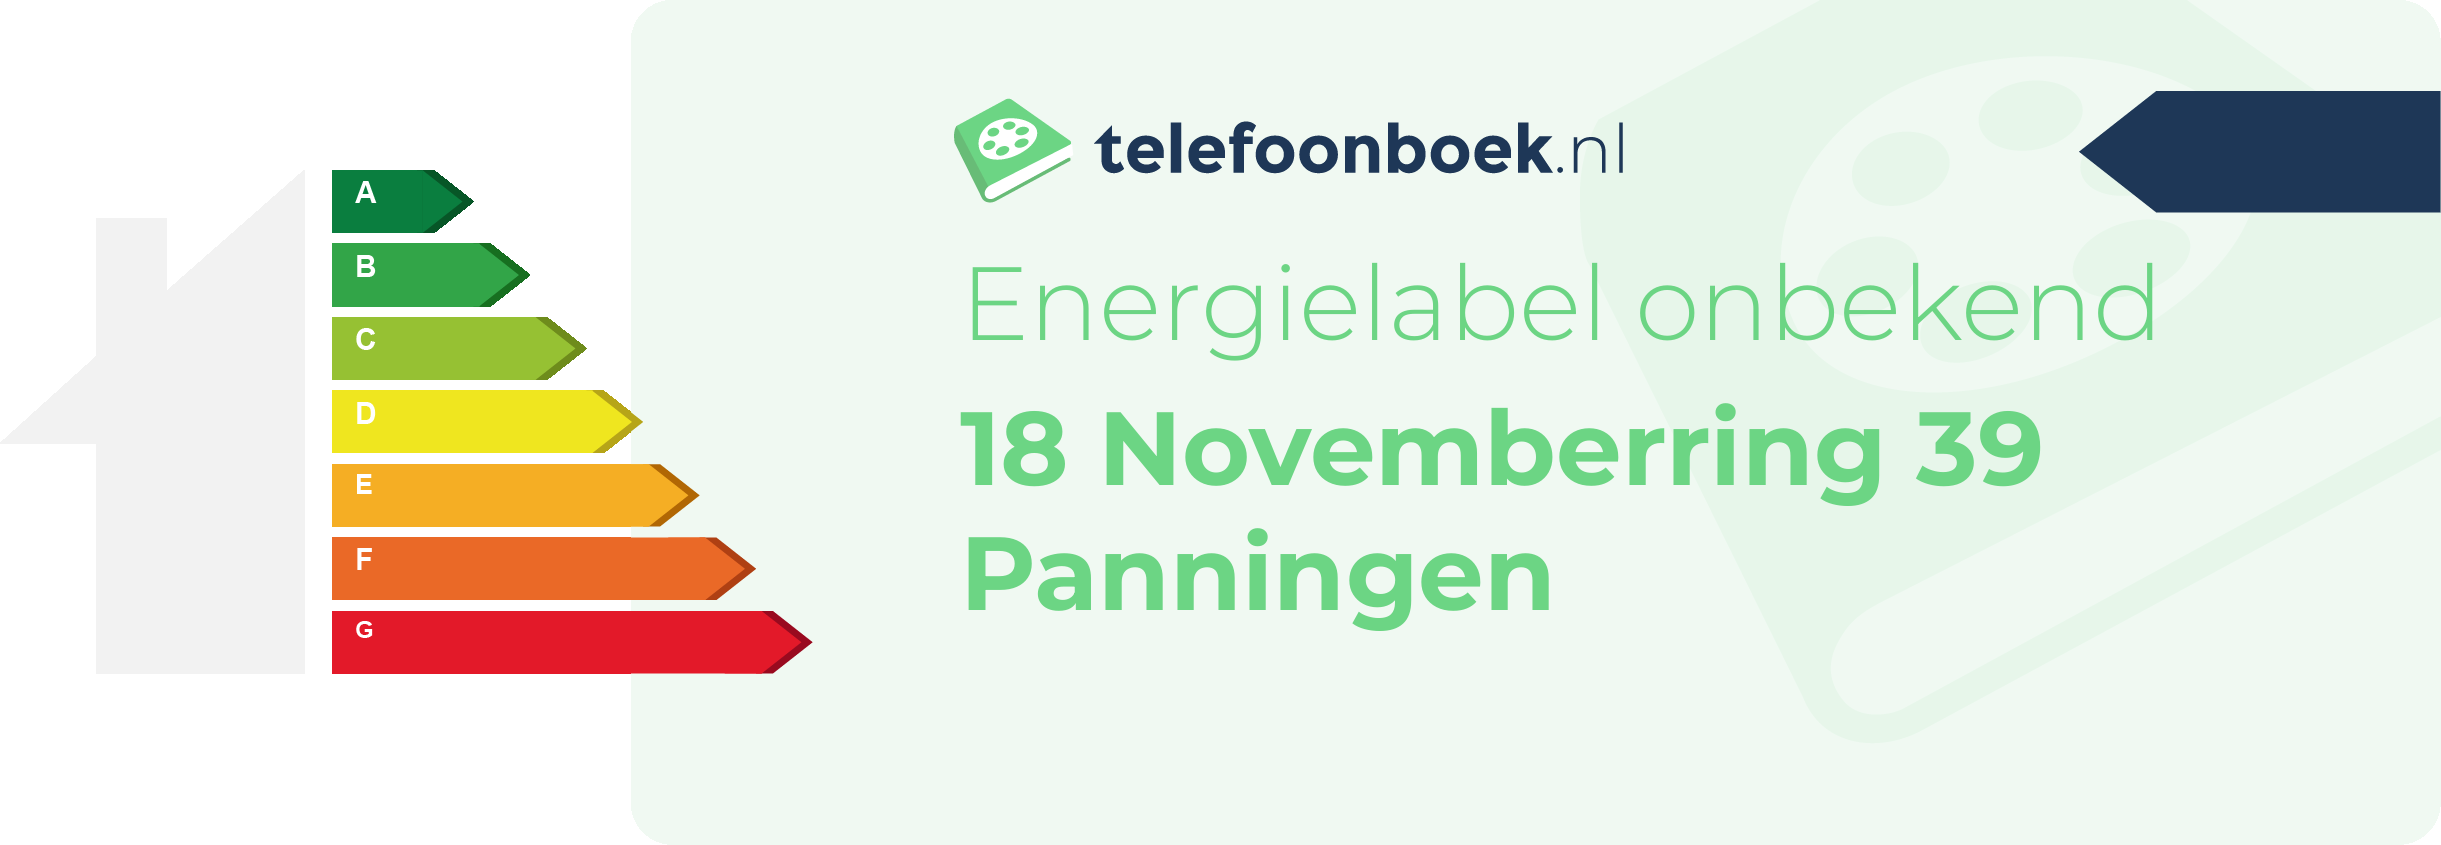 Energielabel 18 Novemberring 39 Panningen